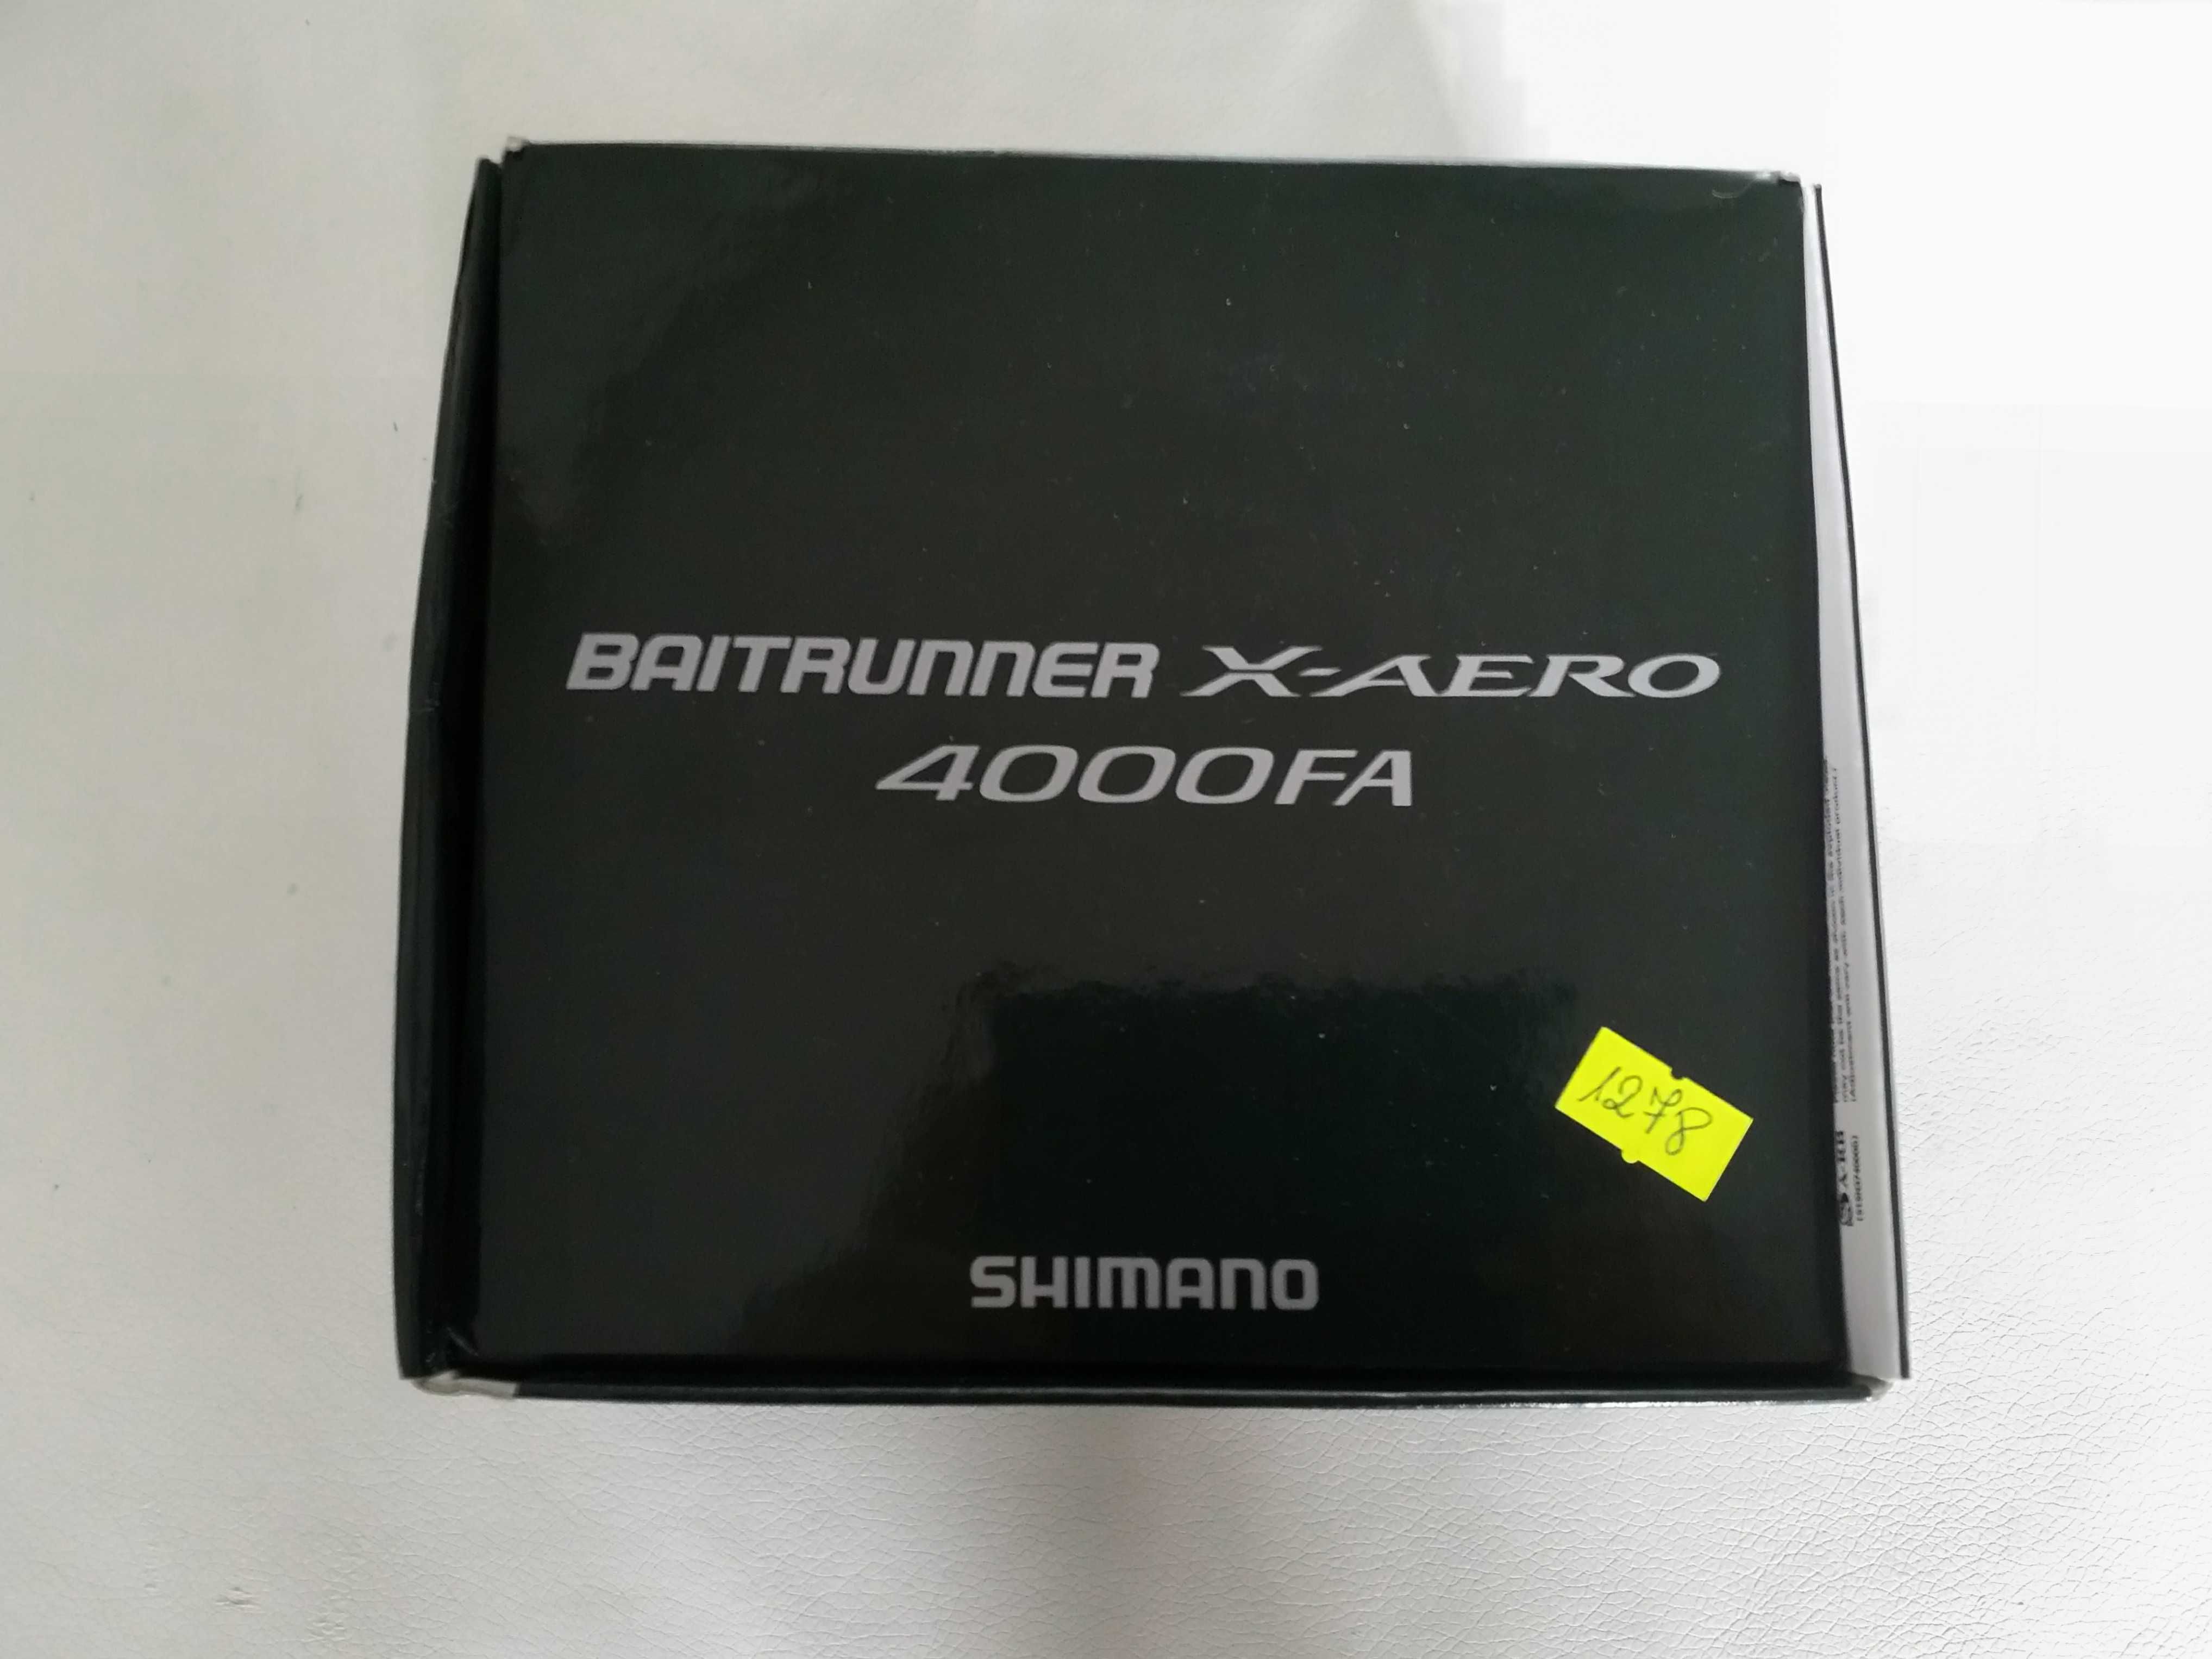 Shimano Baitrunner X-Aero 4000FA